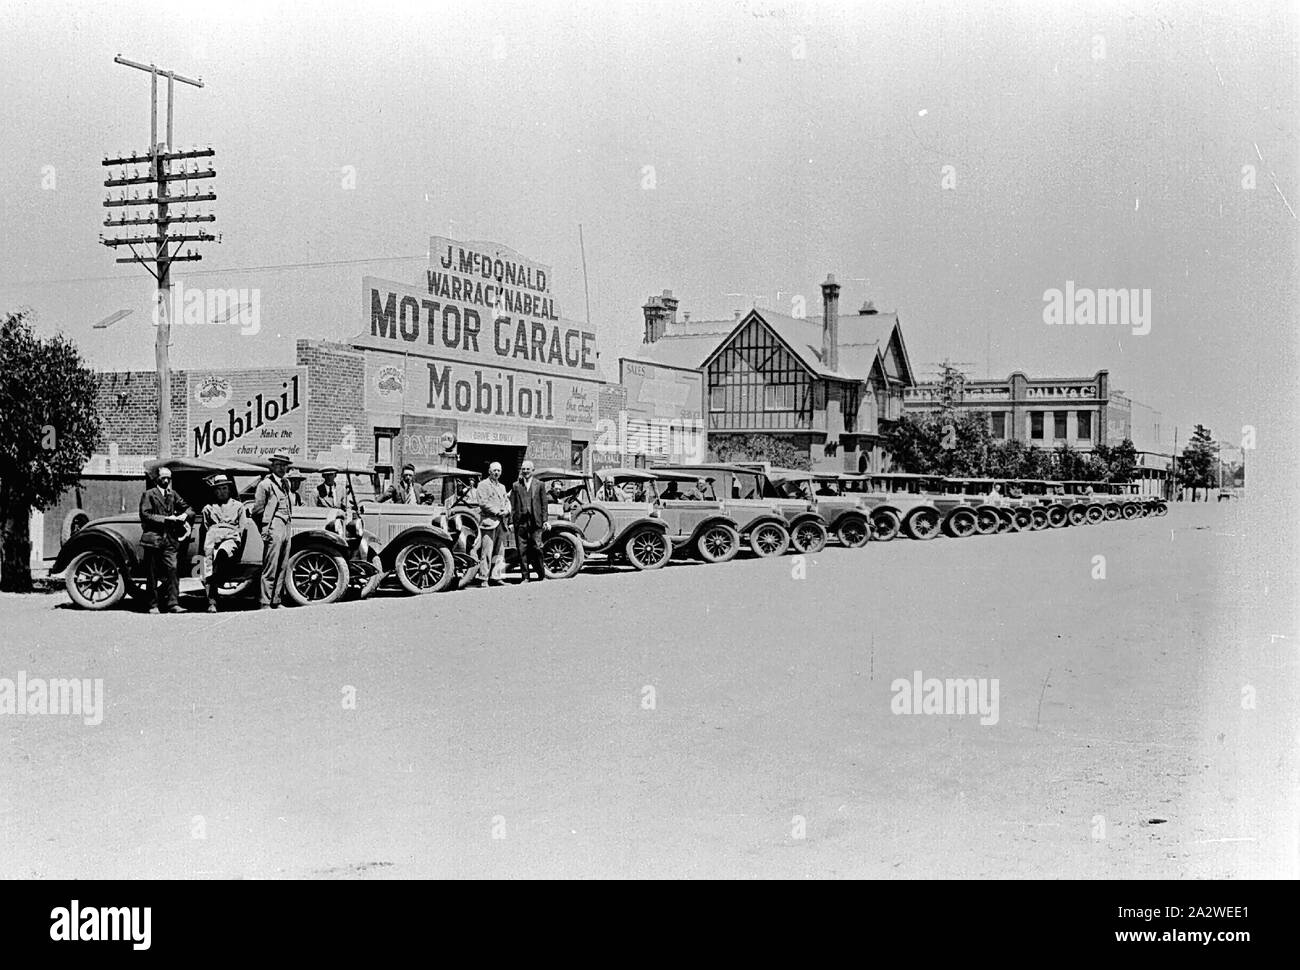 Negative - Warracknabeal, Victoria, 1920-1930, A line up of Chevrolet cars outside J. Mcdonald Motor Garage Stock Photo